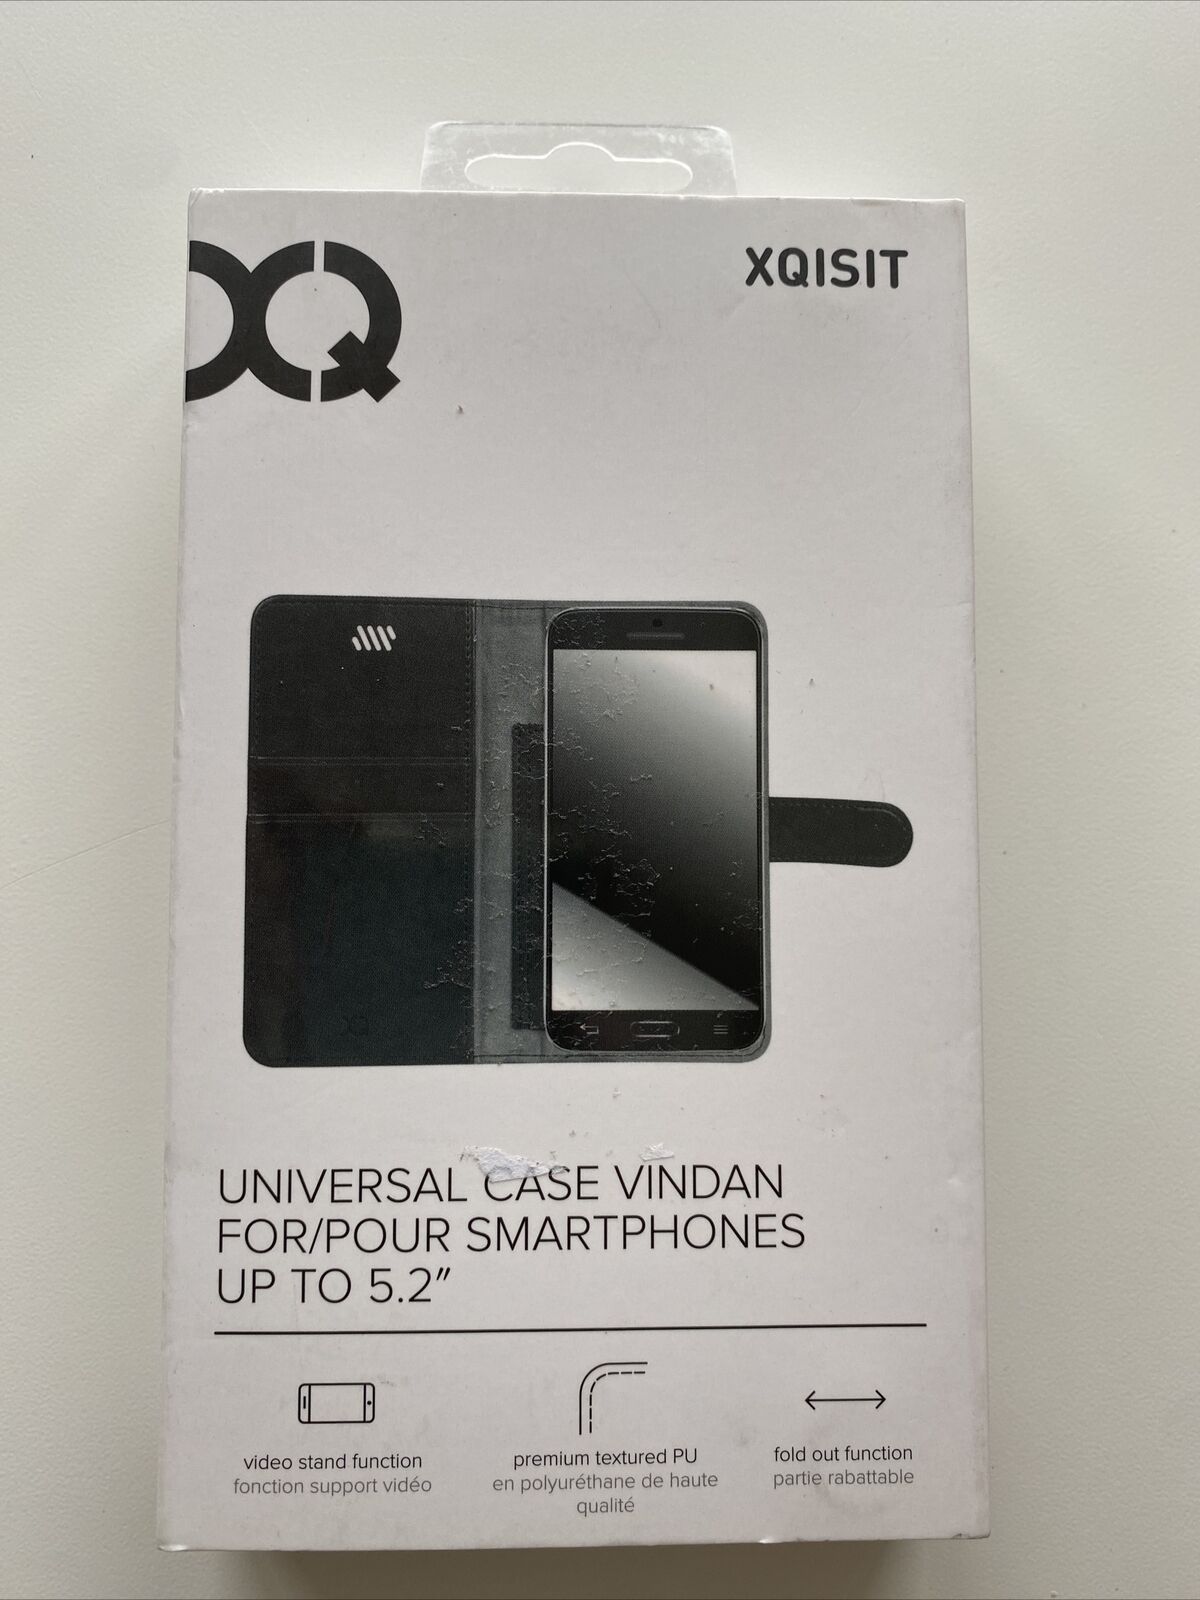 XQISIT Universal BookCase Vindan for Smartphones Up to 5.2